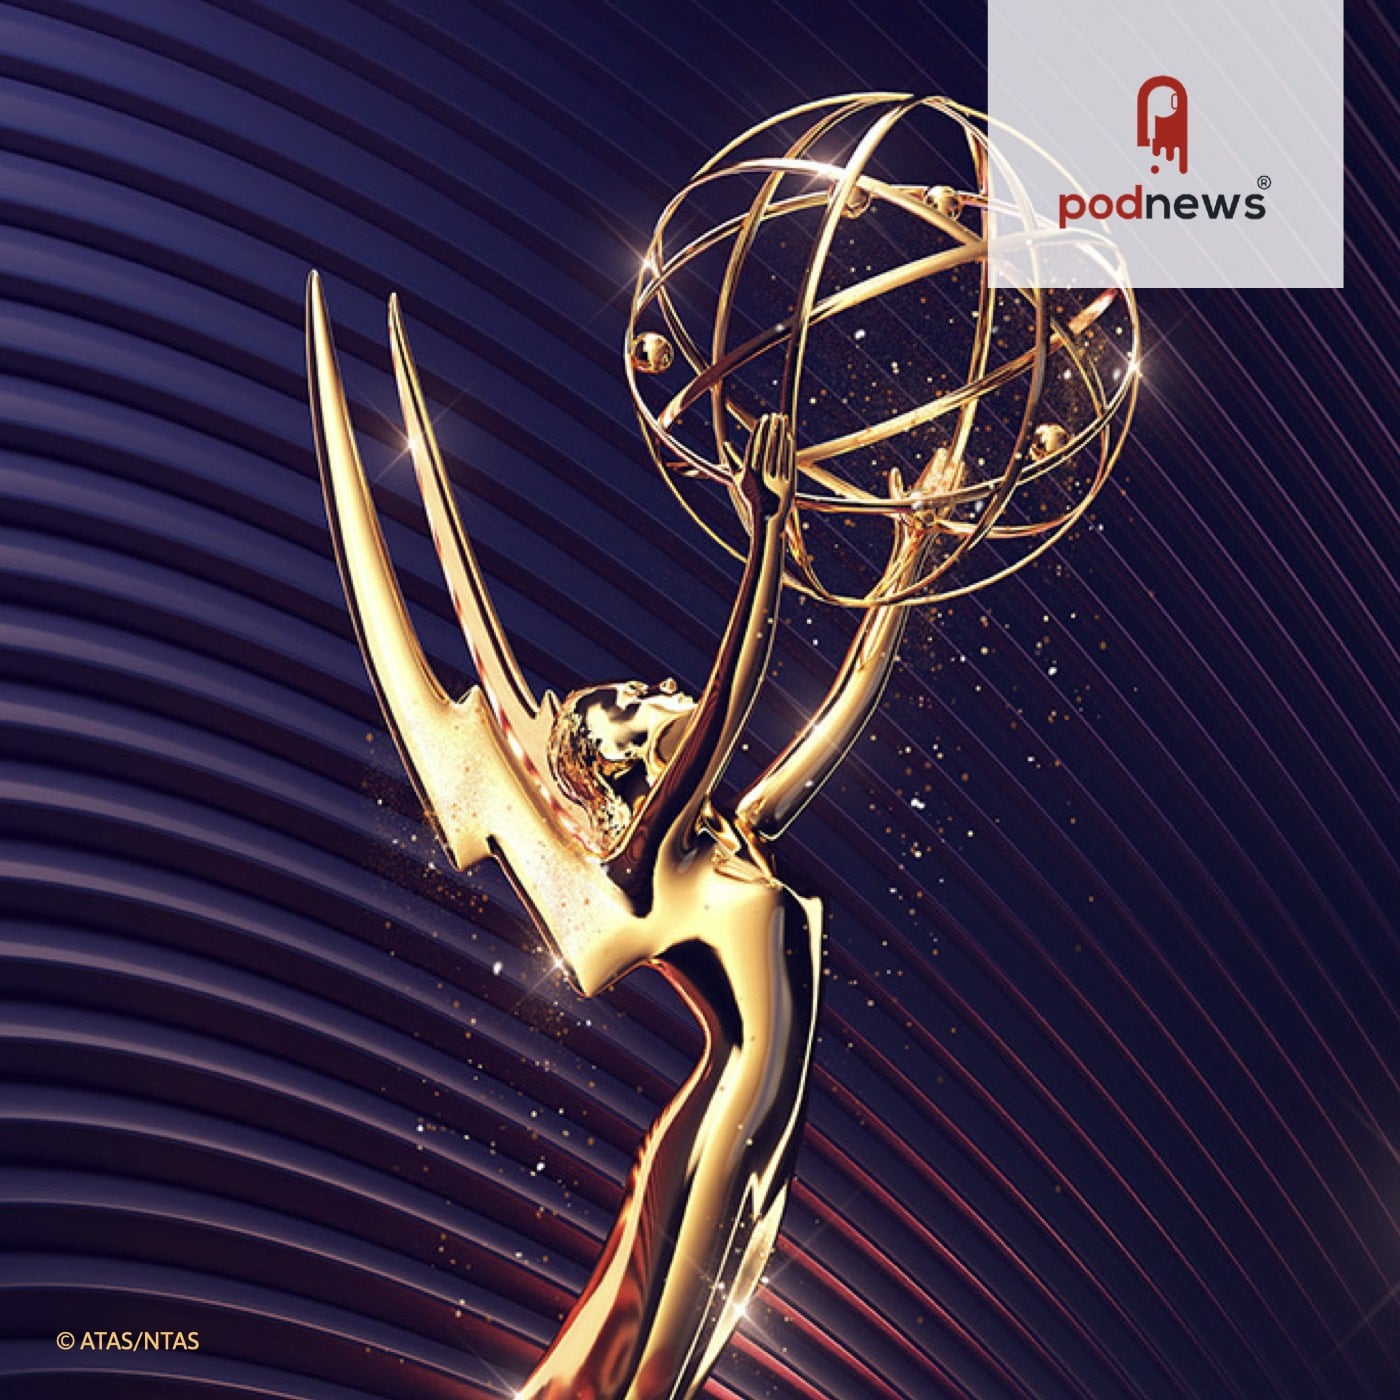 Cleanfeed wins an Emmy Award